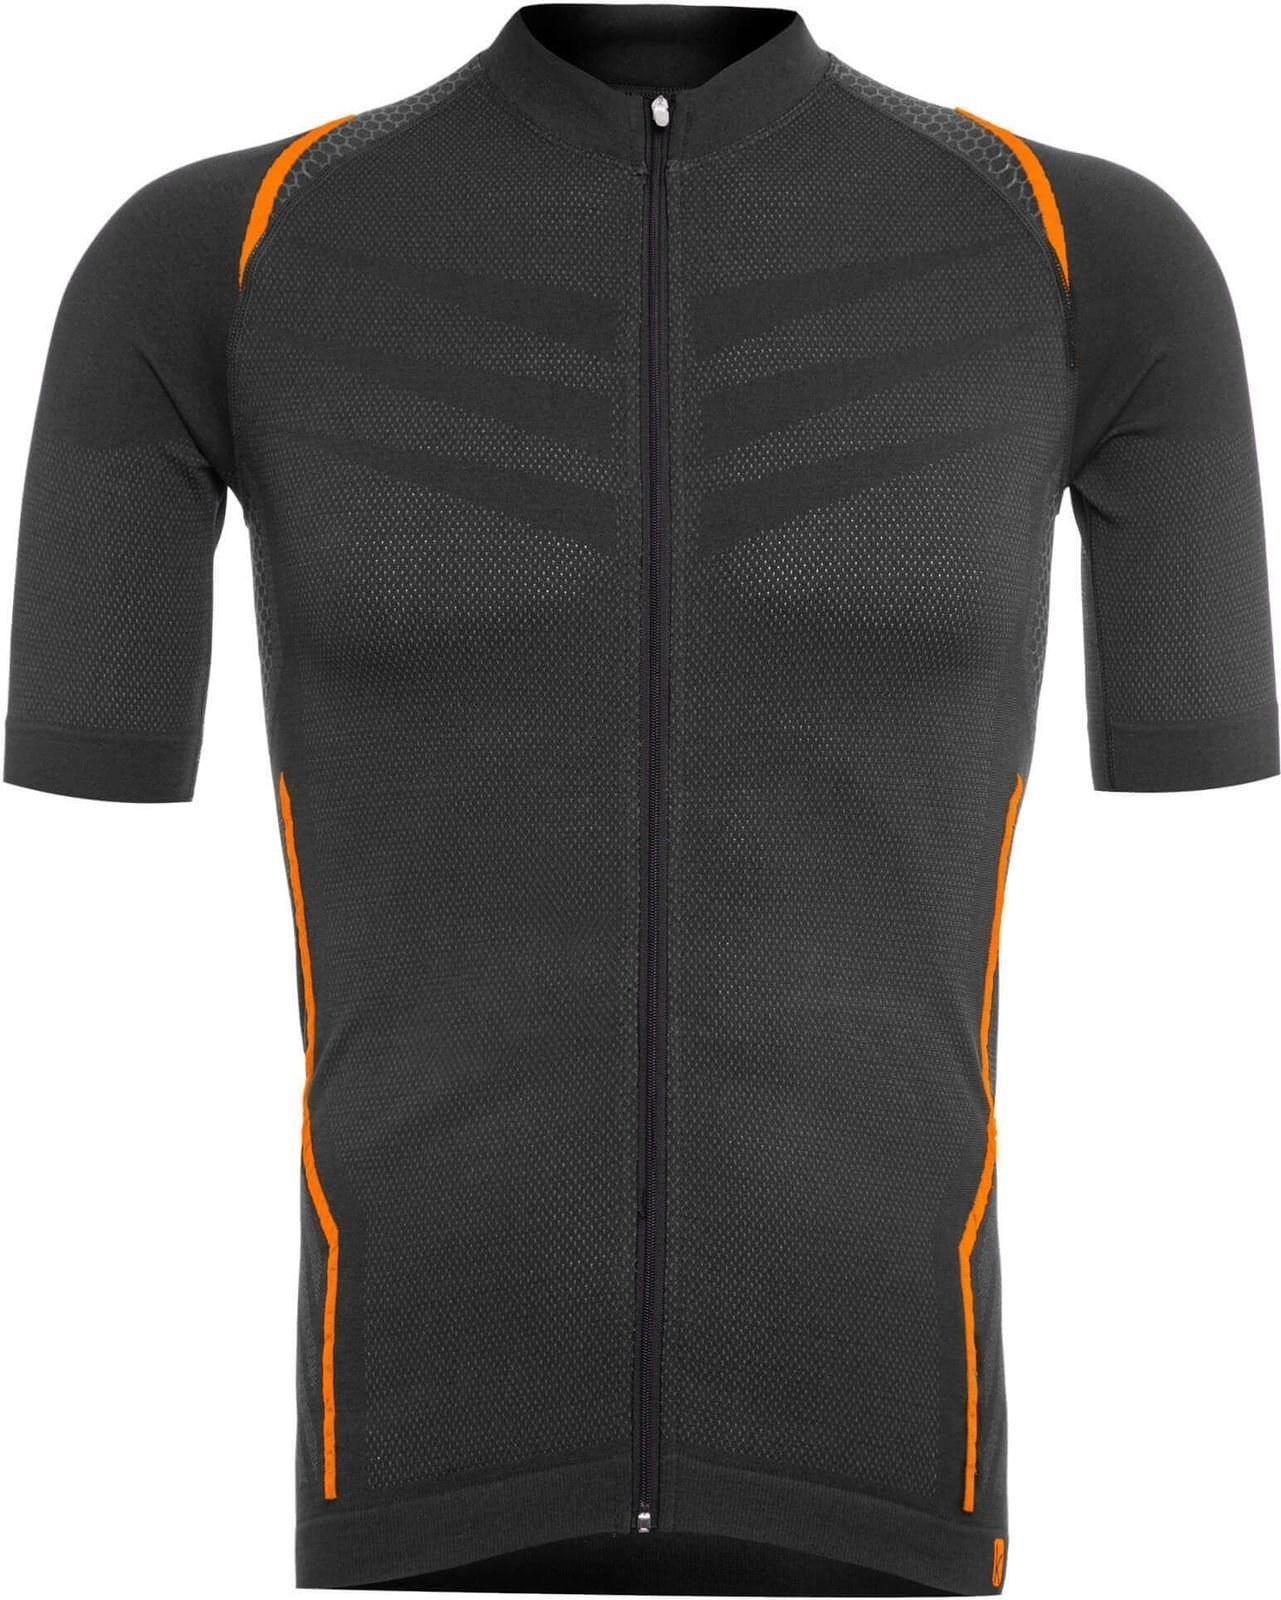 Cycling jersey Funkier Respirare Jersey Grey/Orange XL/2XL